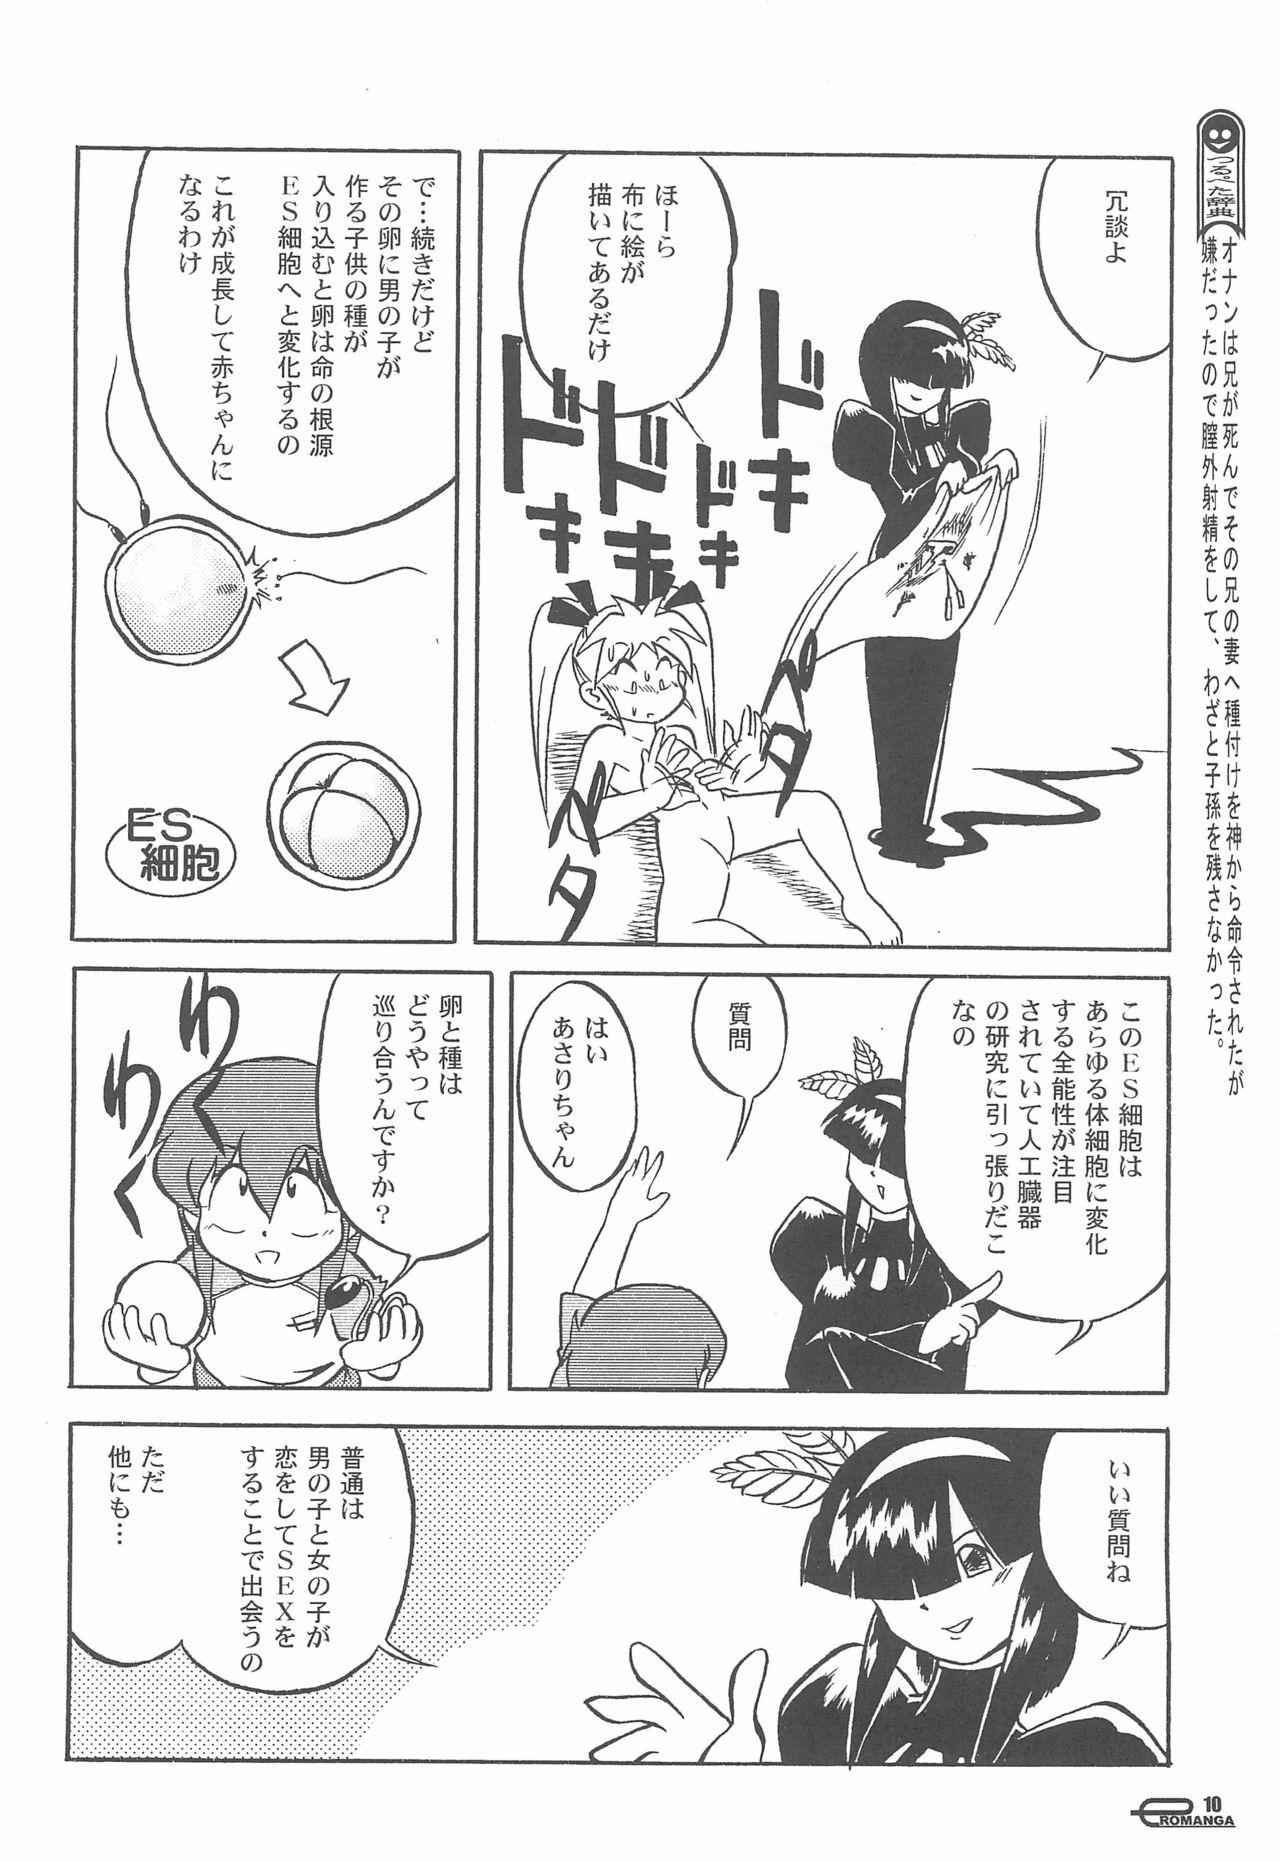 Pica Manga Science Onna no ko no Himitsu - Manga science Gaping - Page 12